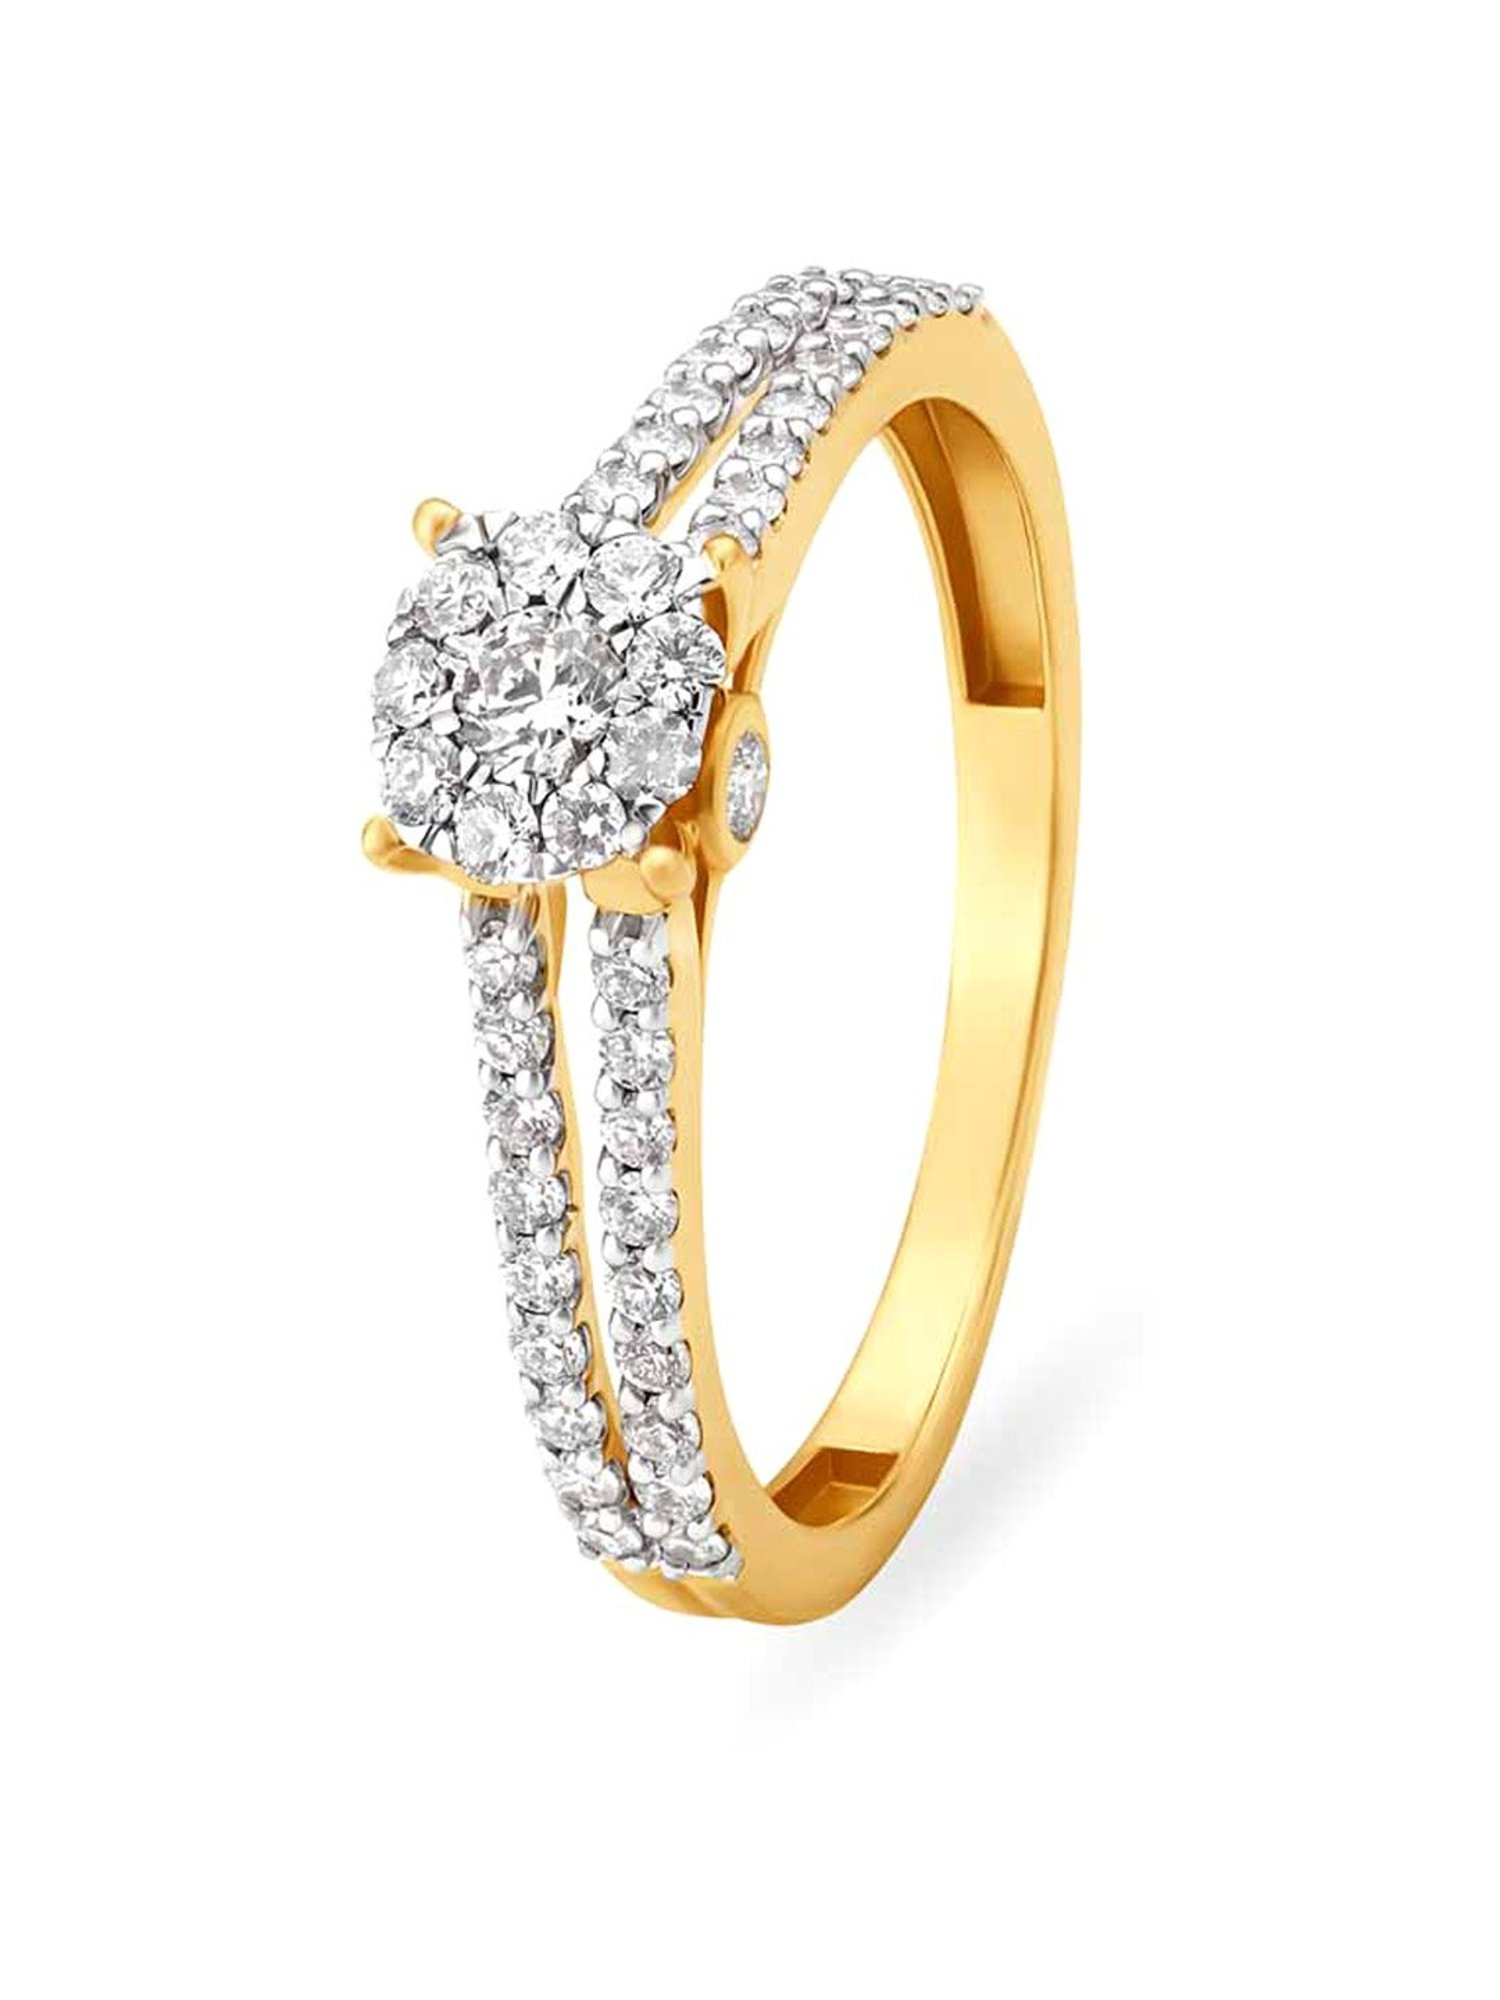 Enchanting 18 Karat Yellow Gold And Diamond Finger Ring